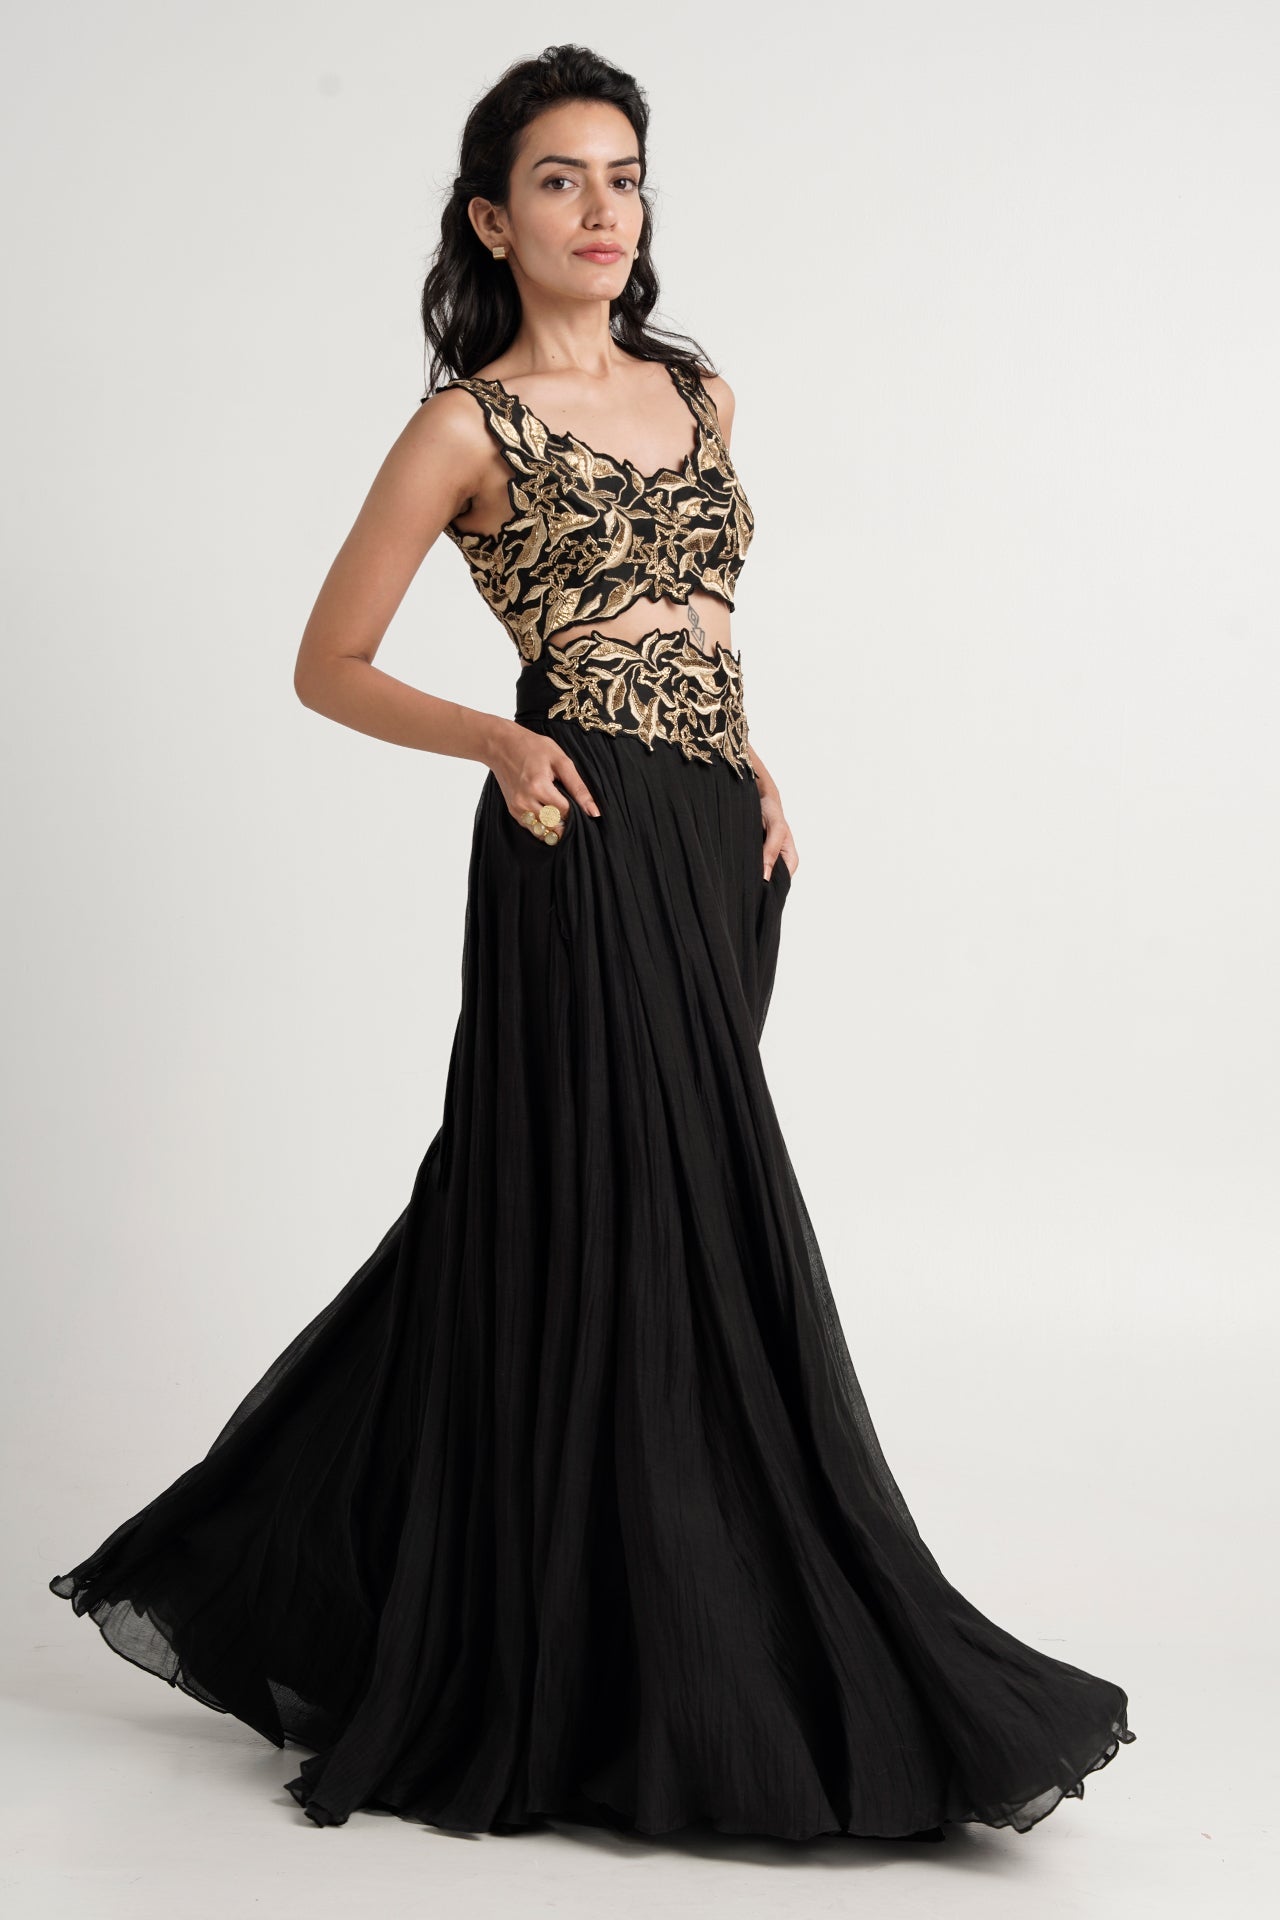 Ruhee 2.0 - Black Chanderi Golden Sequinned Top + Skirt